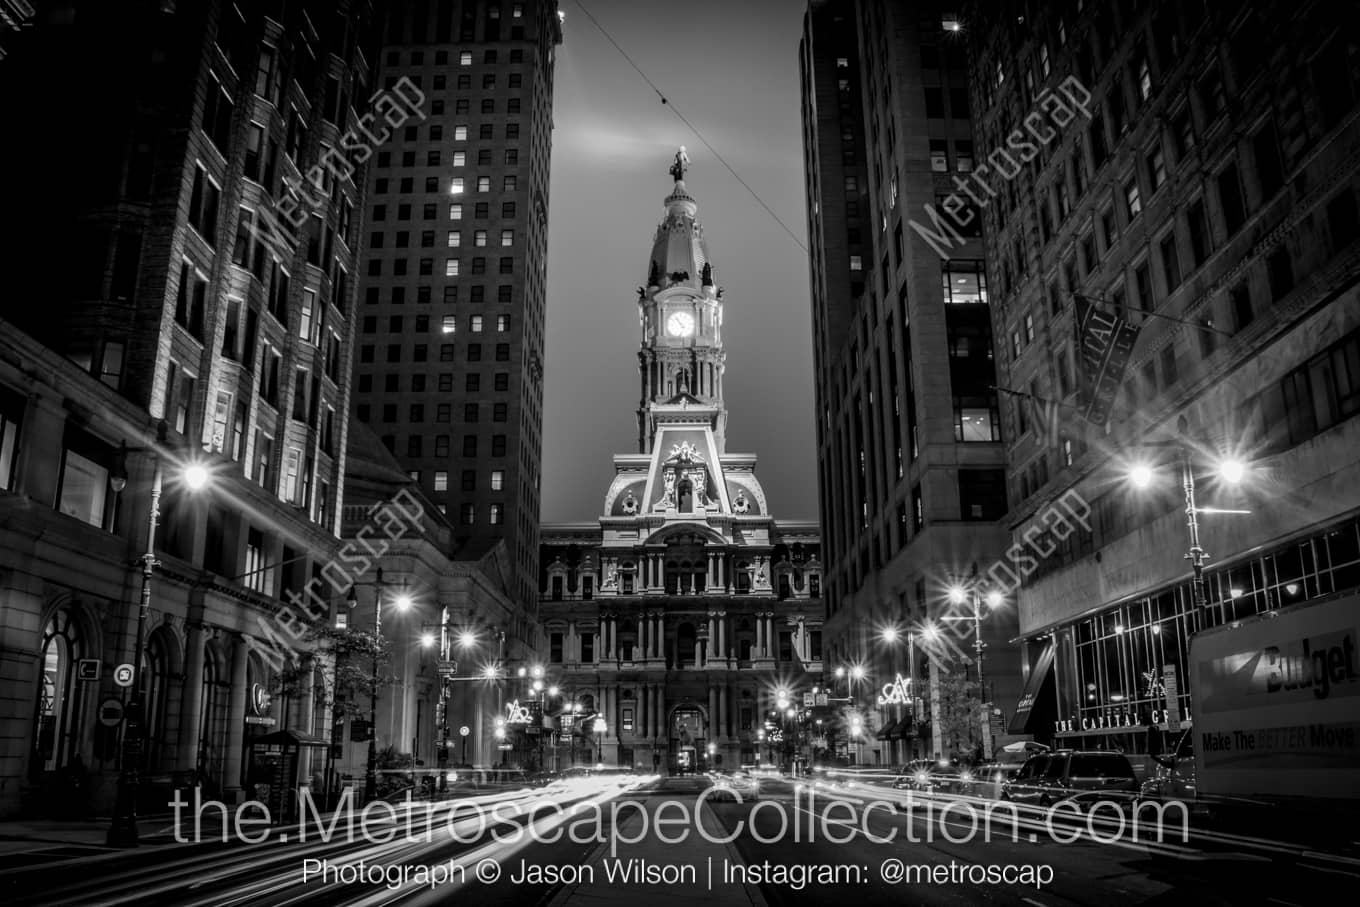 Philadelphia Pennsylvania Picture at Night